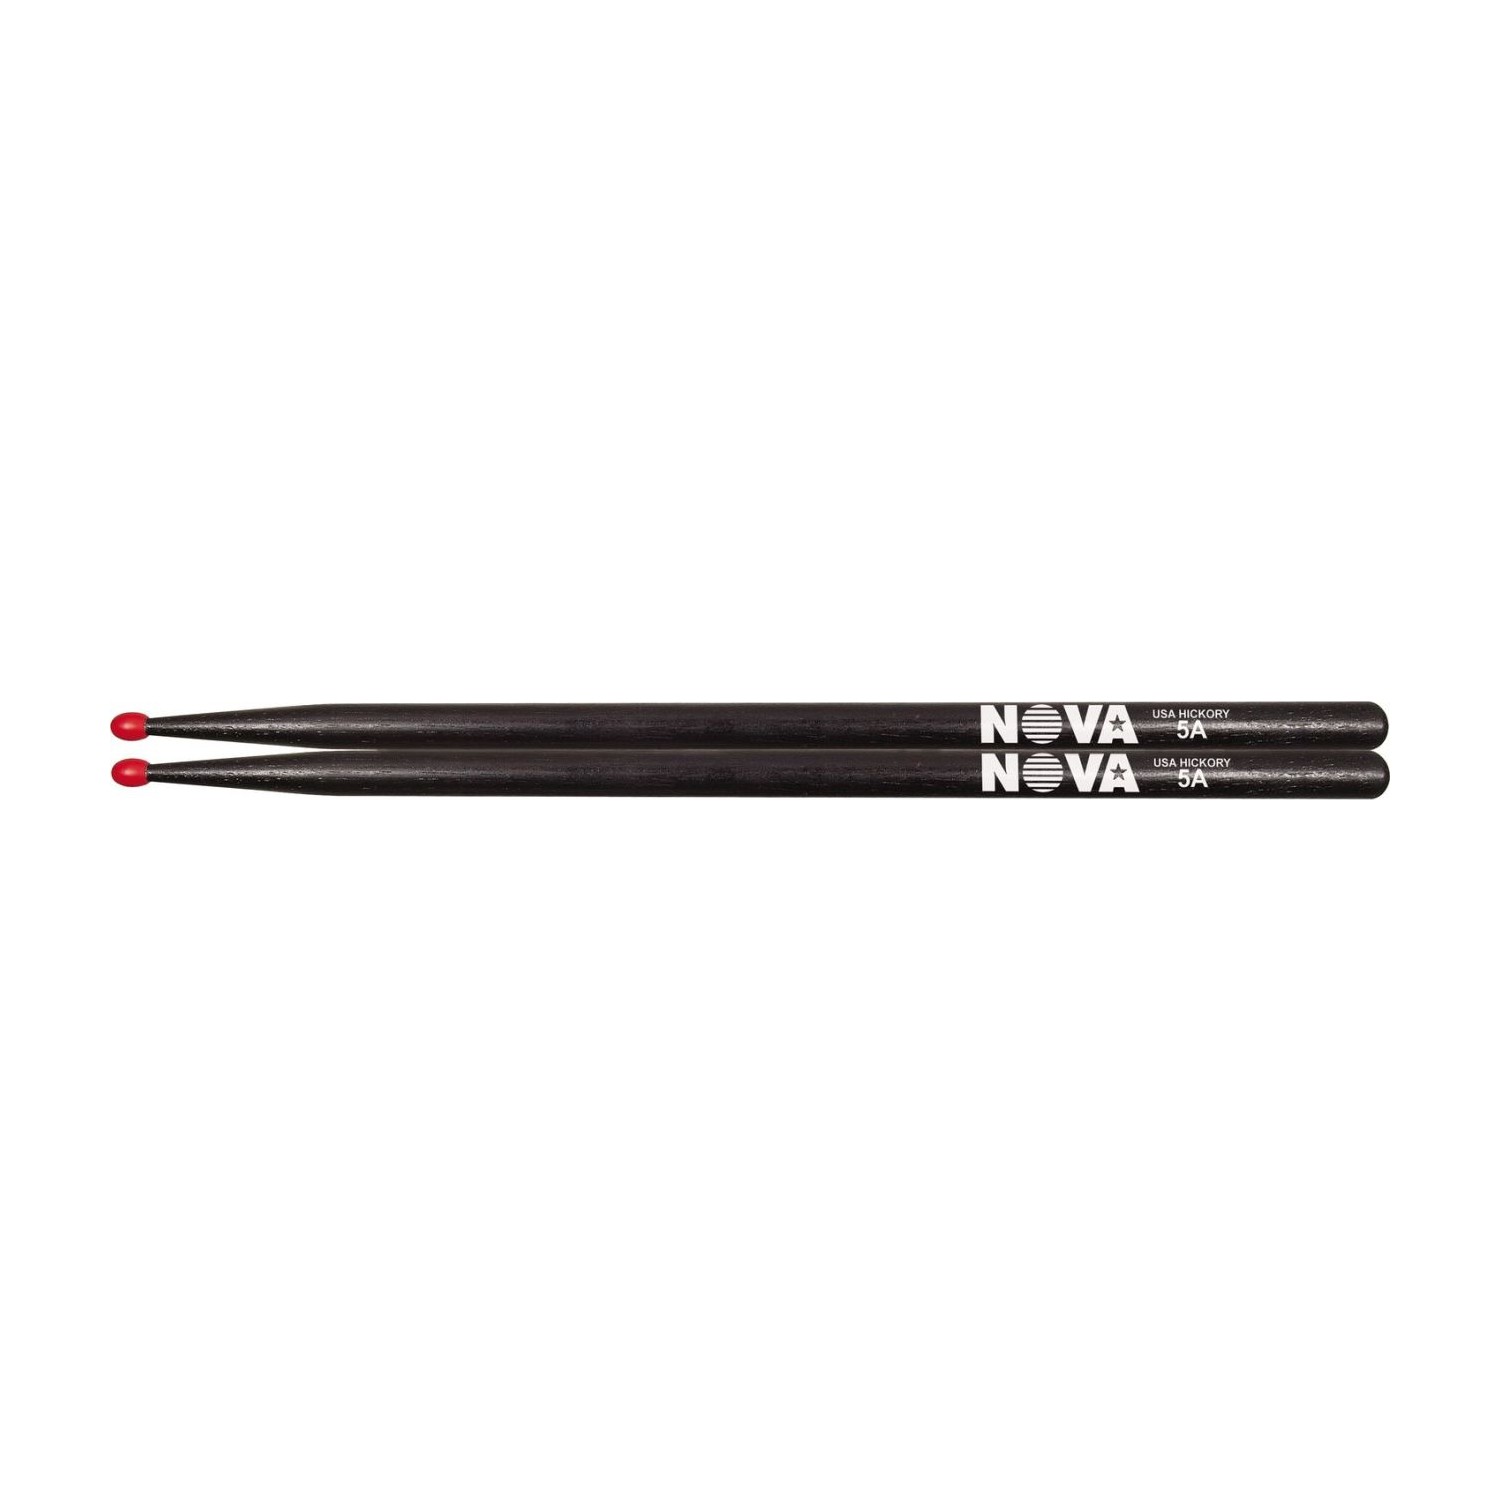 Nova N5anb 5a Black - Olive Nylon - Drum stick - Variation 2